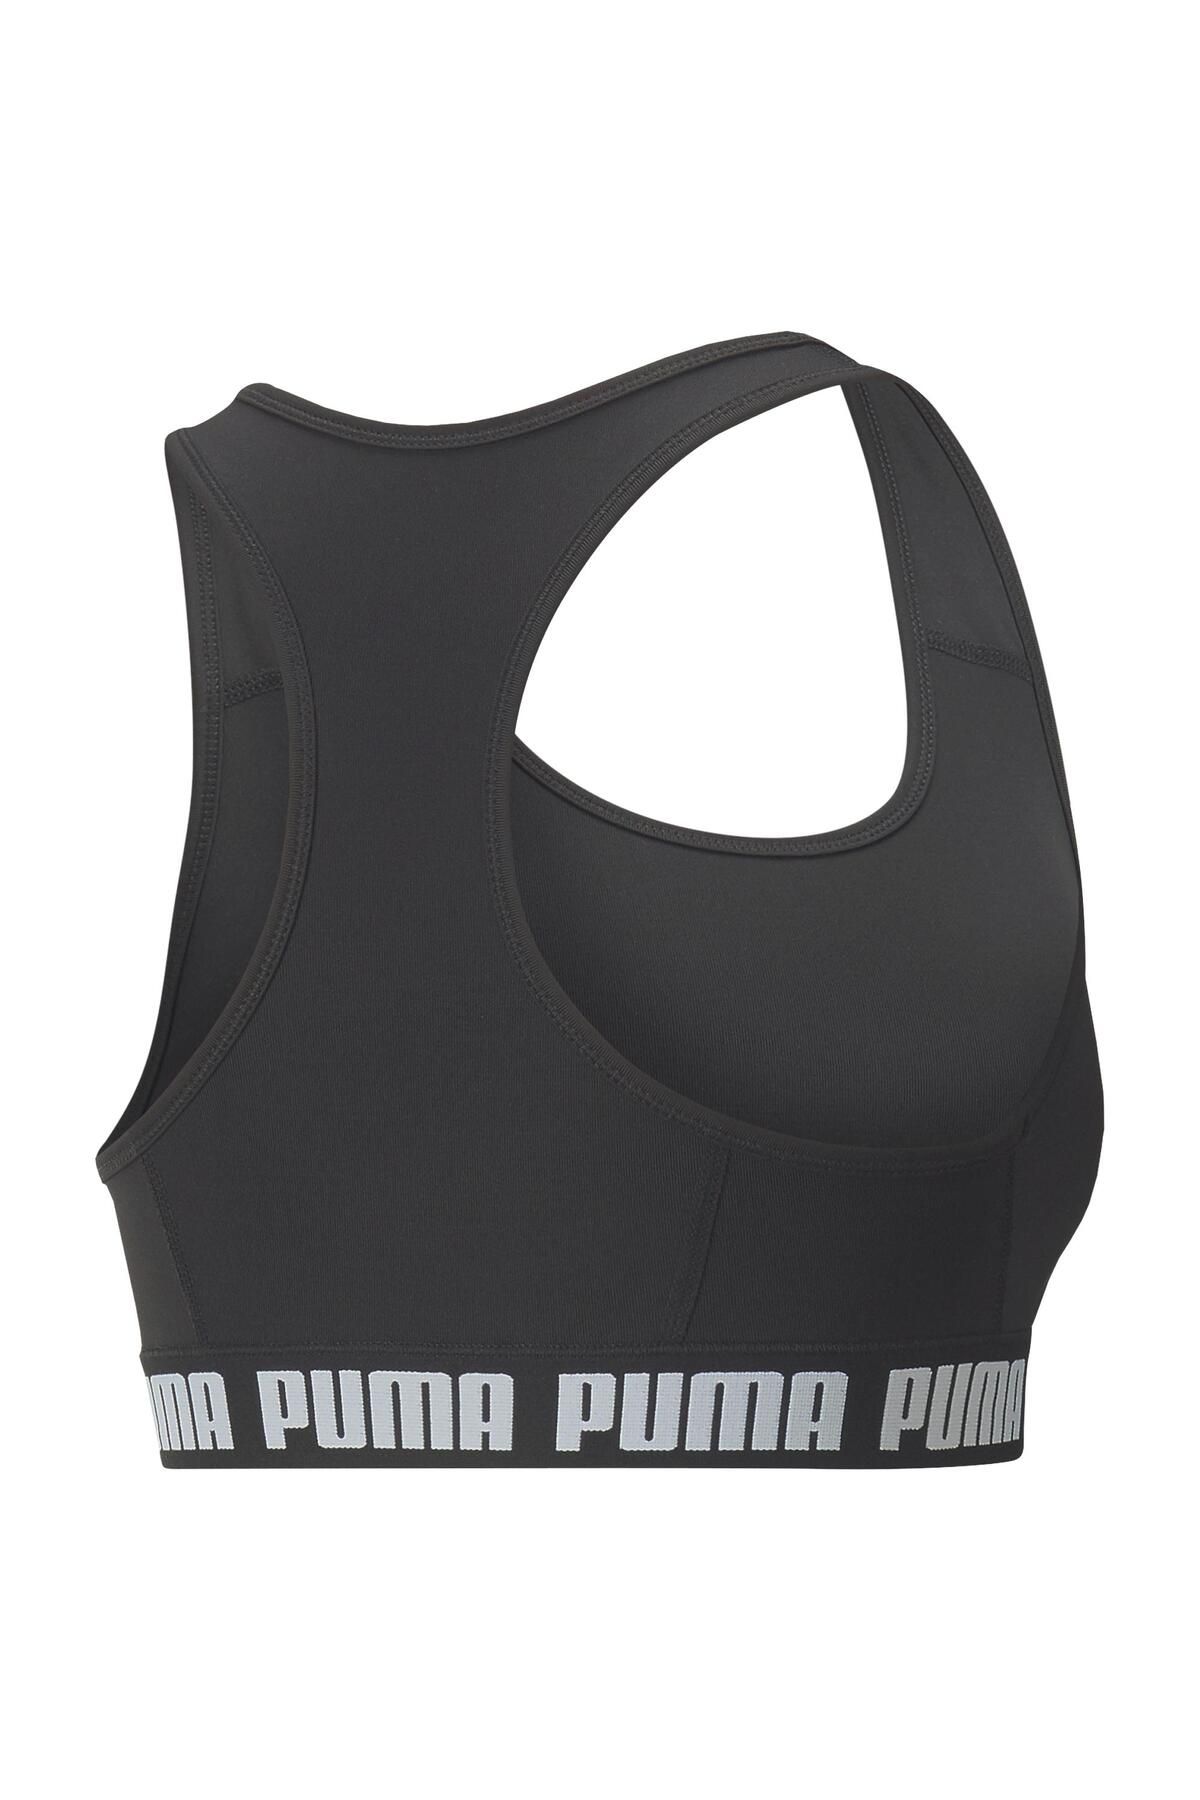 Puma Puma سرین میانه پوما محکم زنانه